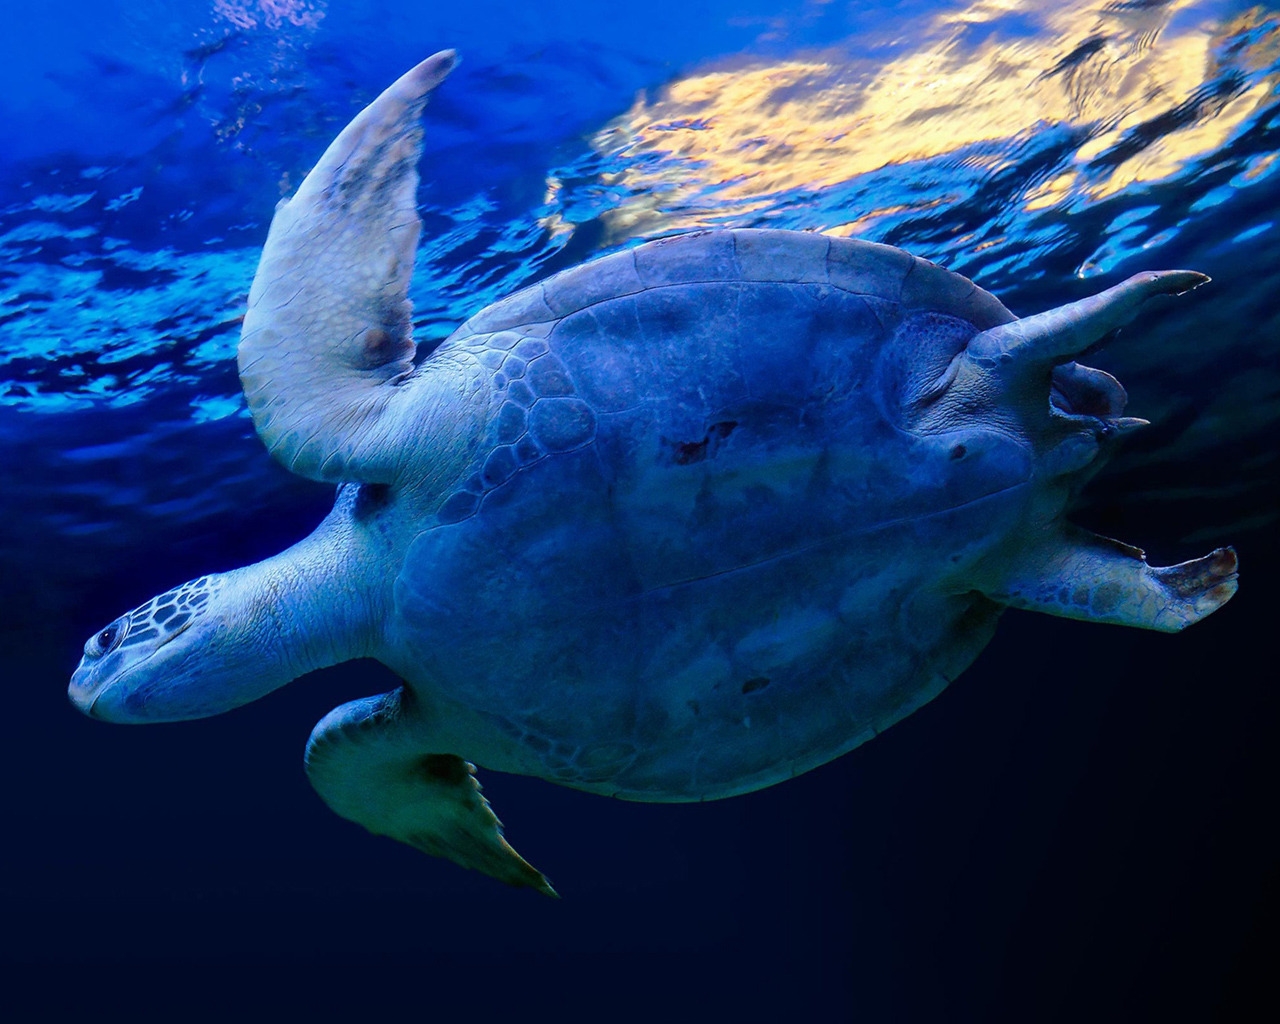 Swimming Sea Turtle for 1280 x 1024 resolution